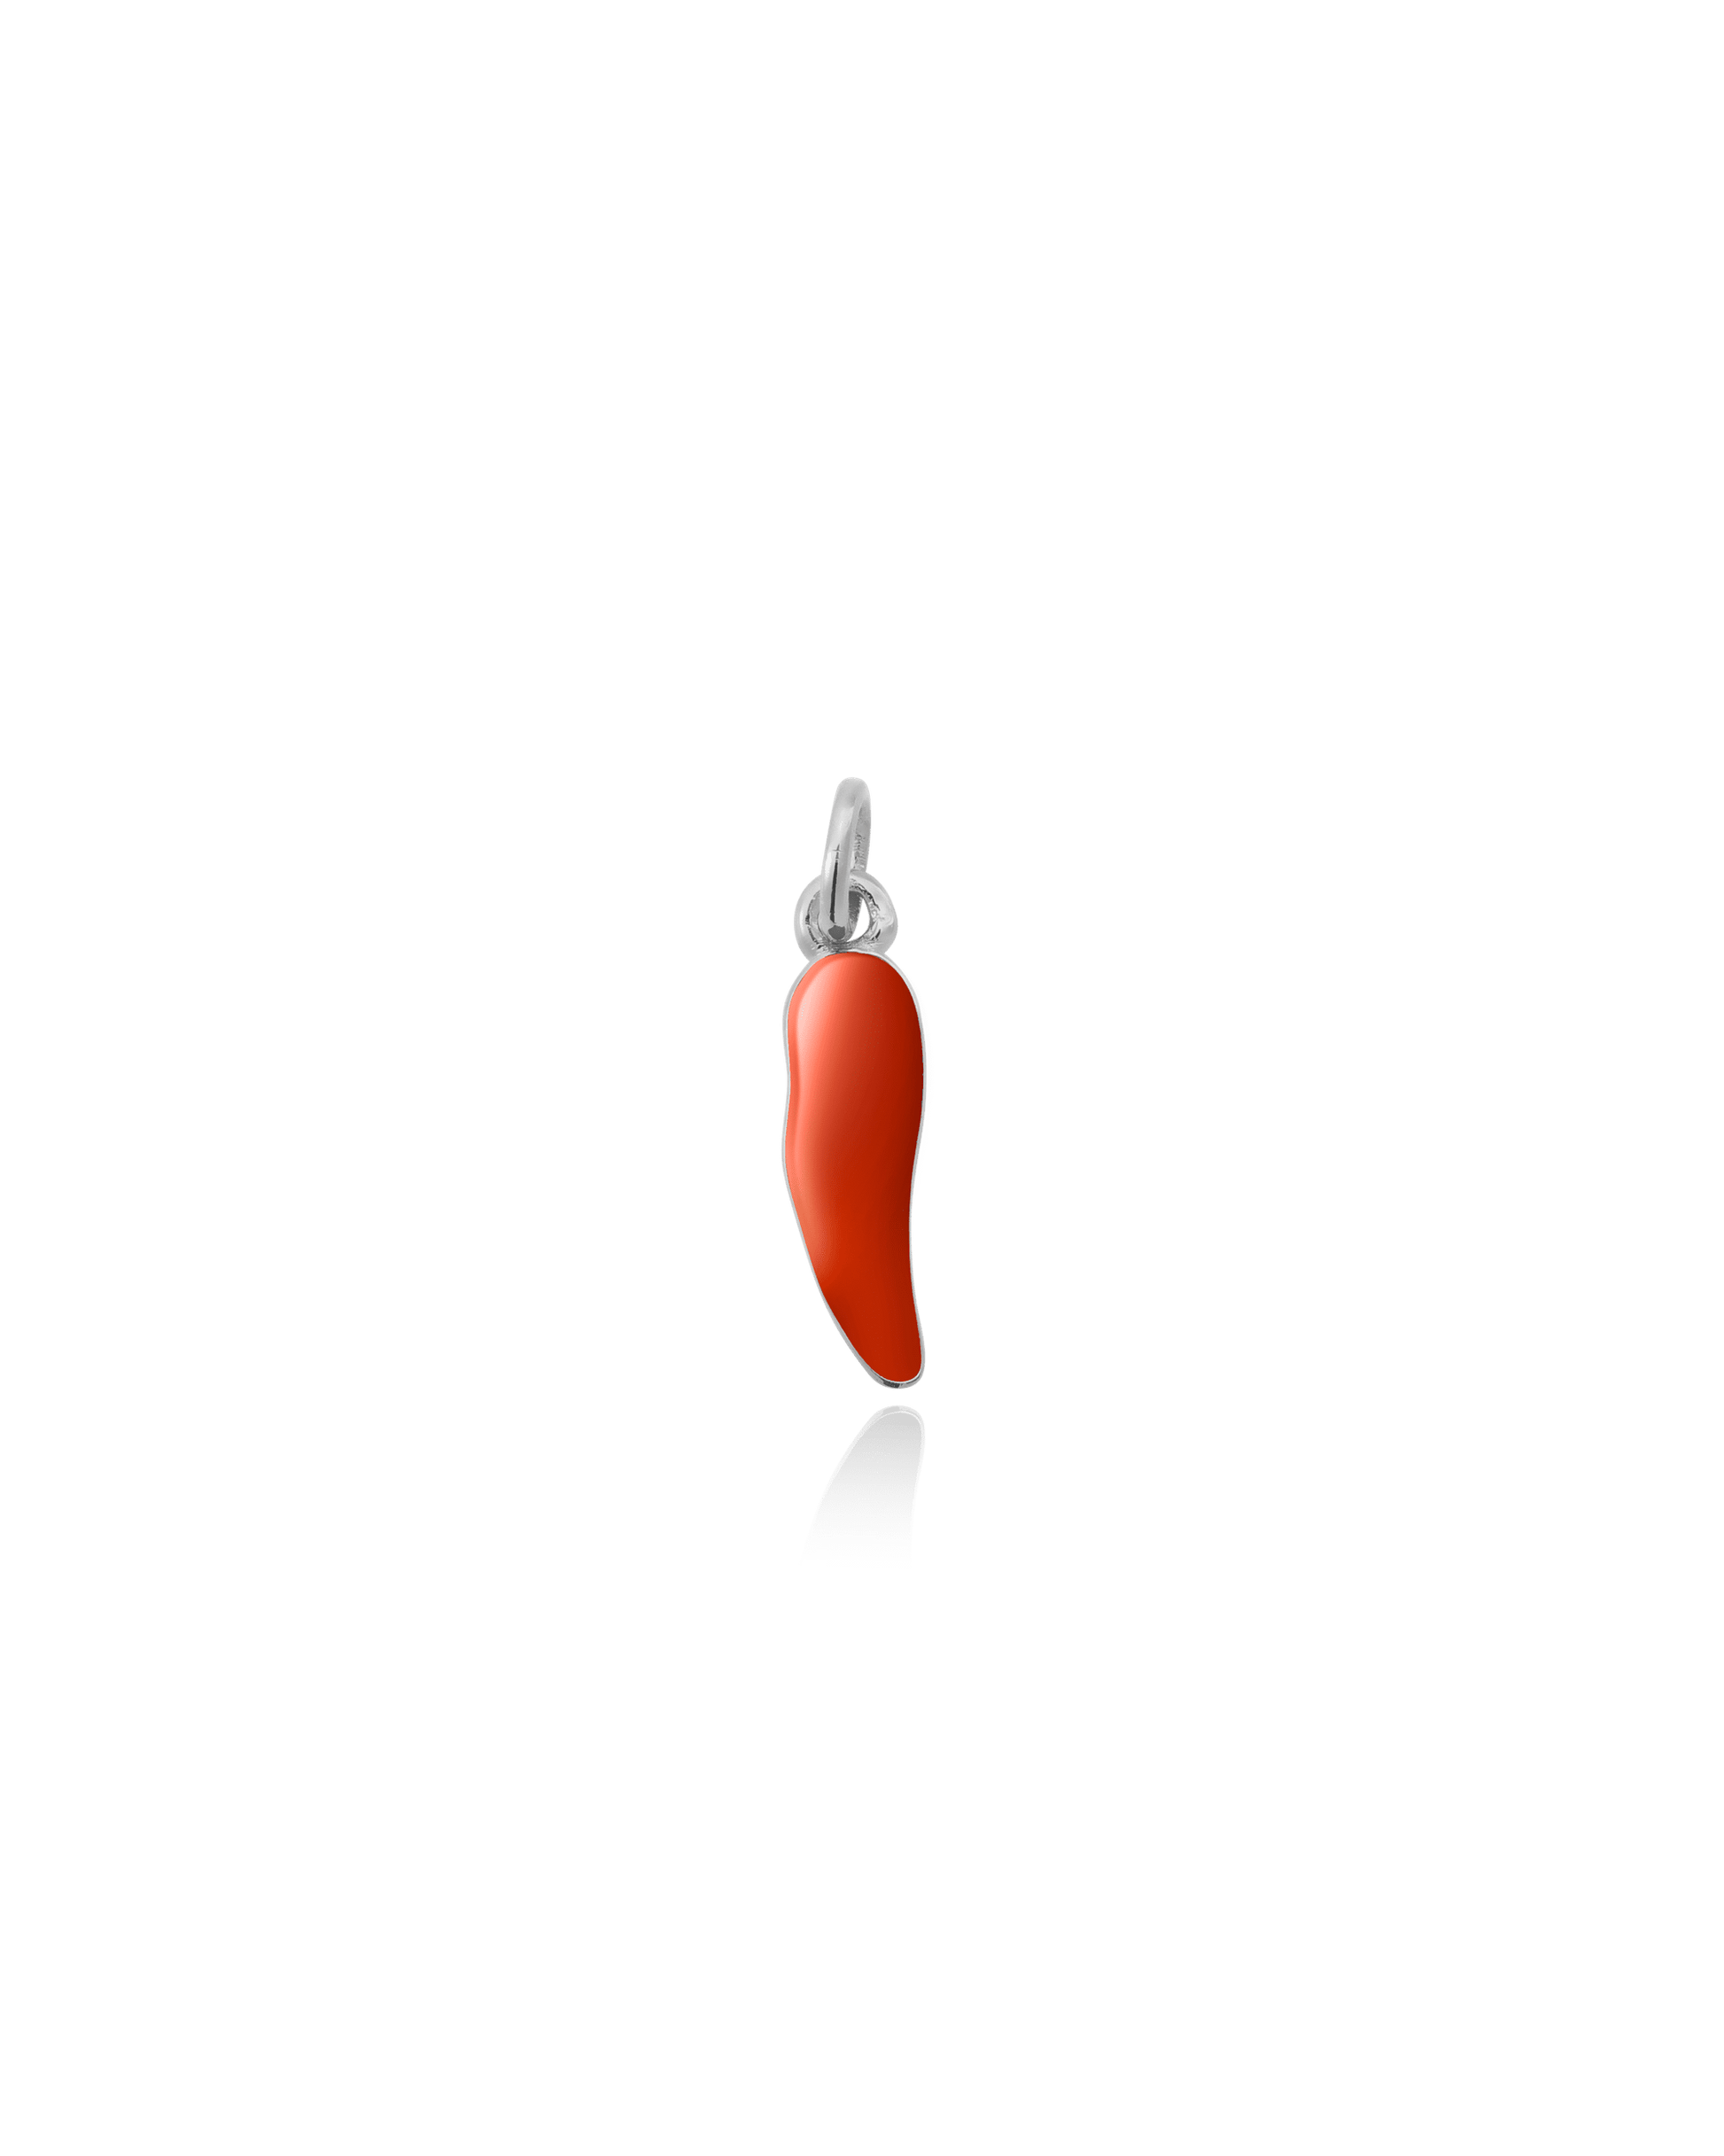 Pepper Charm - 925 Sterling Silver Charm magal-dev No 